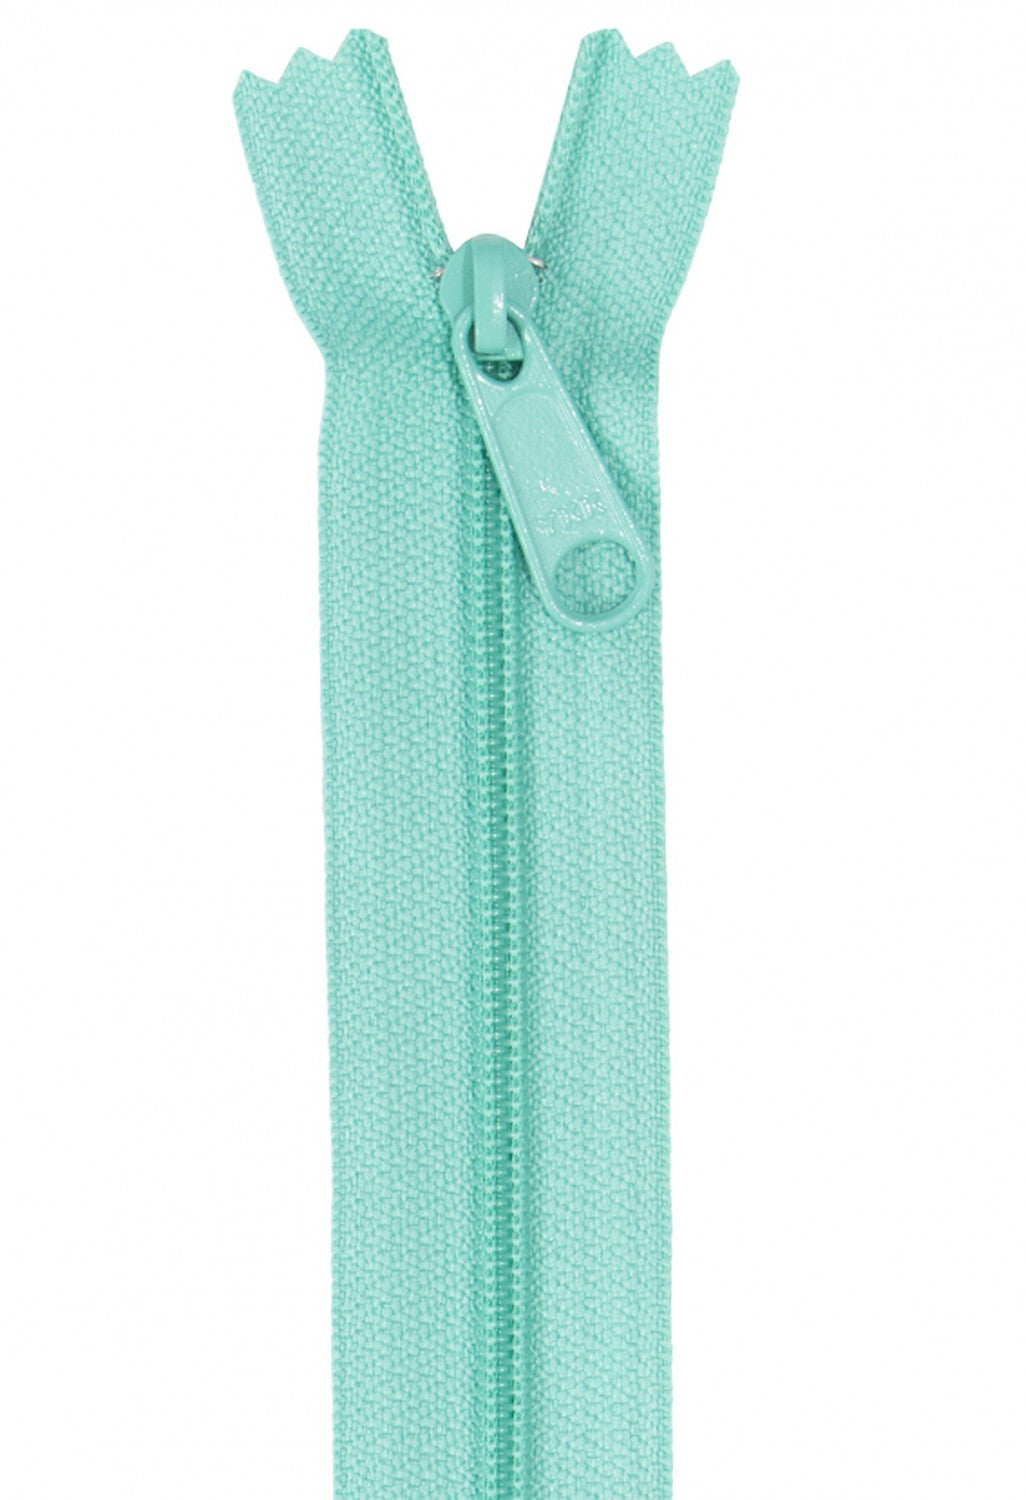 Handbag Zipper - Turquoise - 24" - by Annie